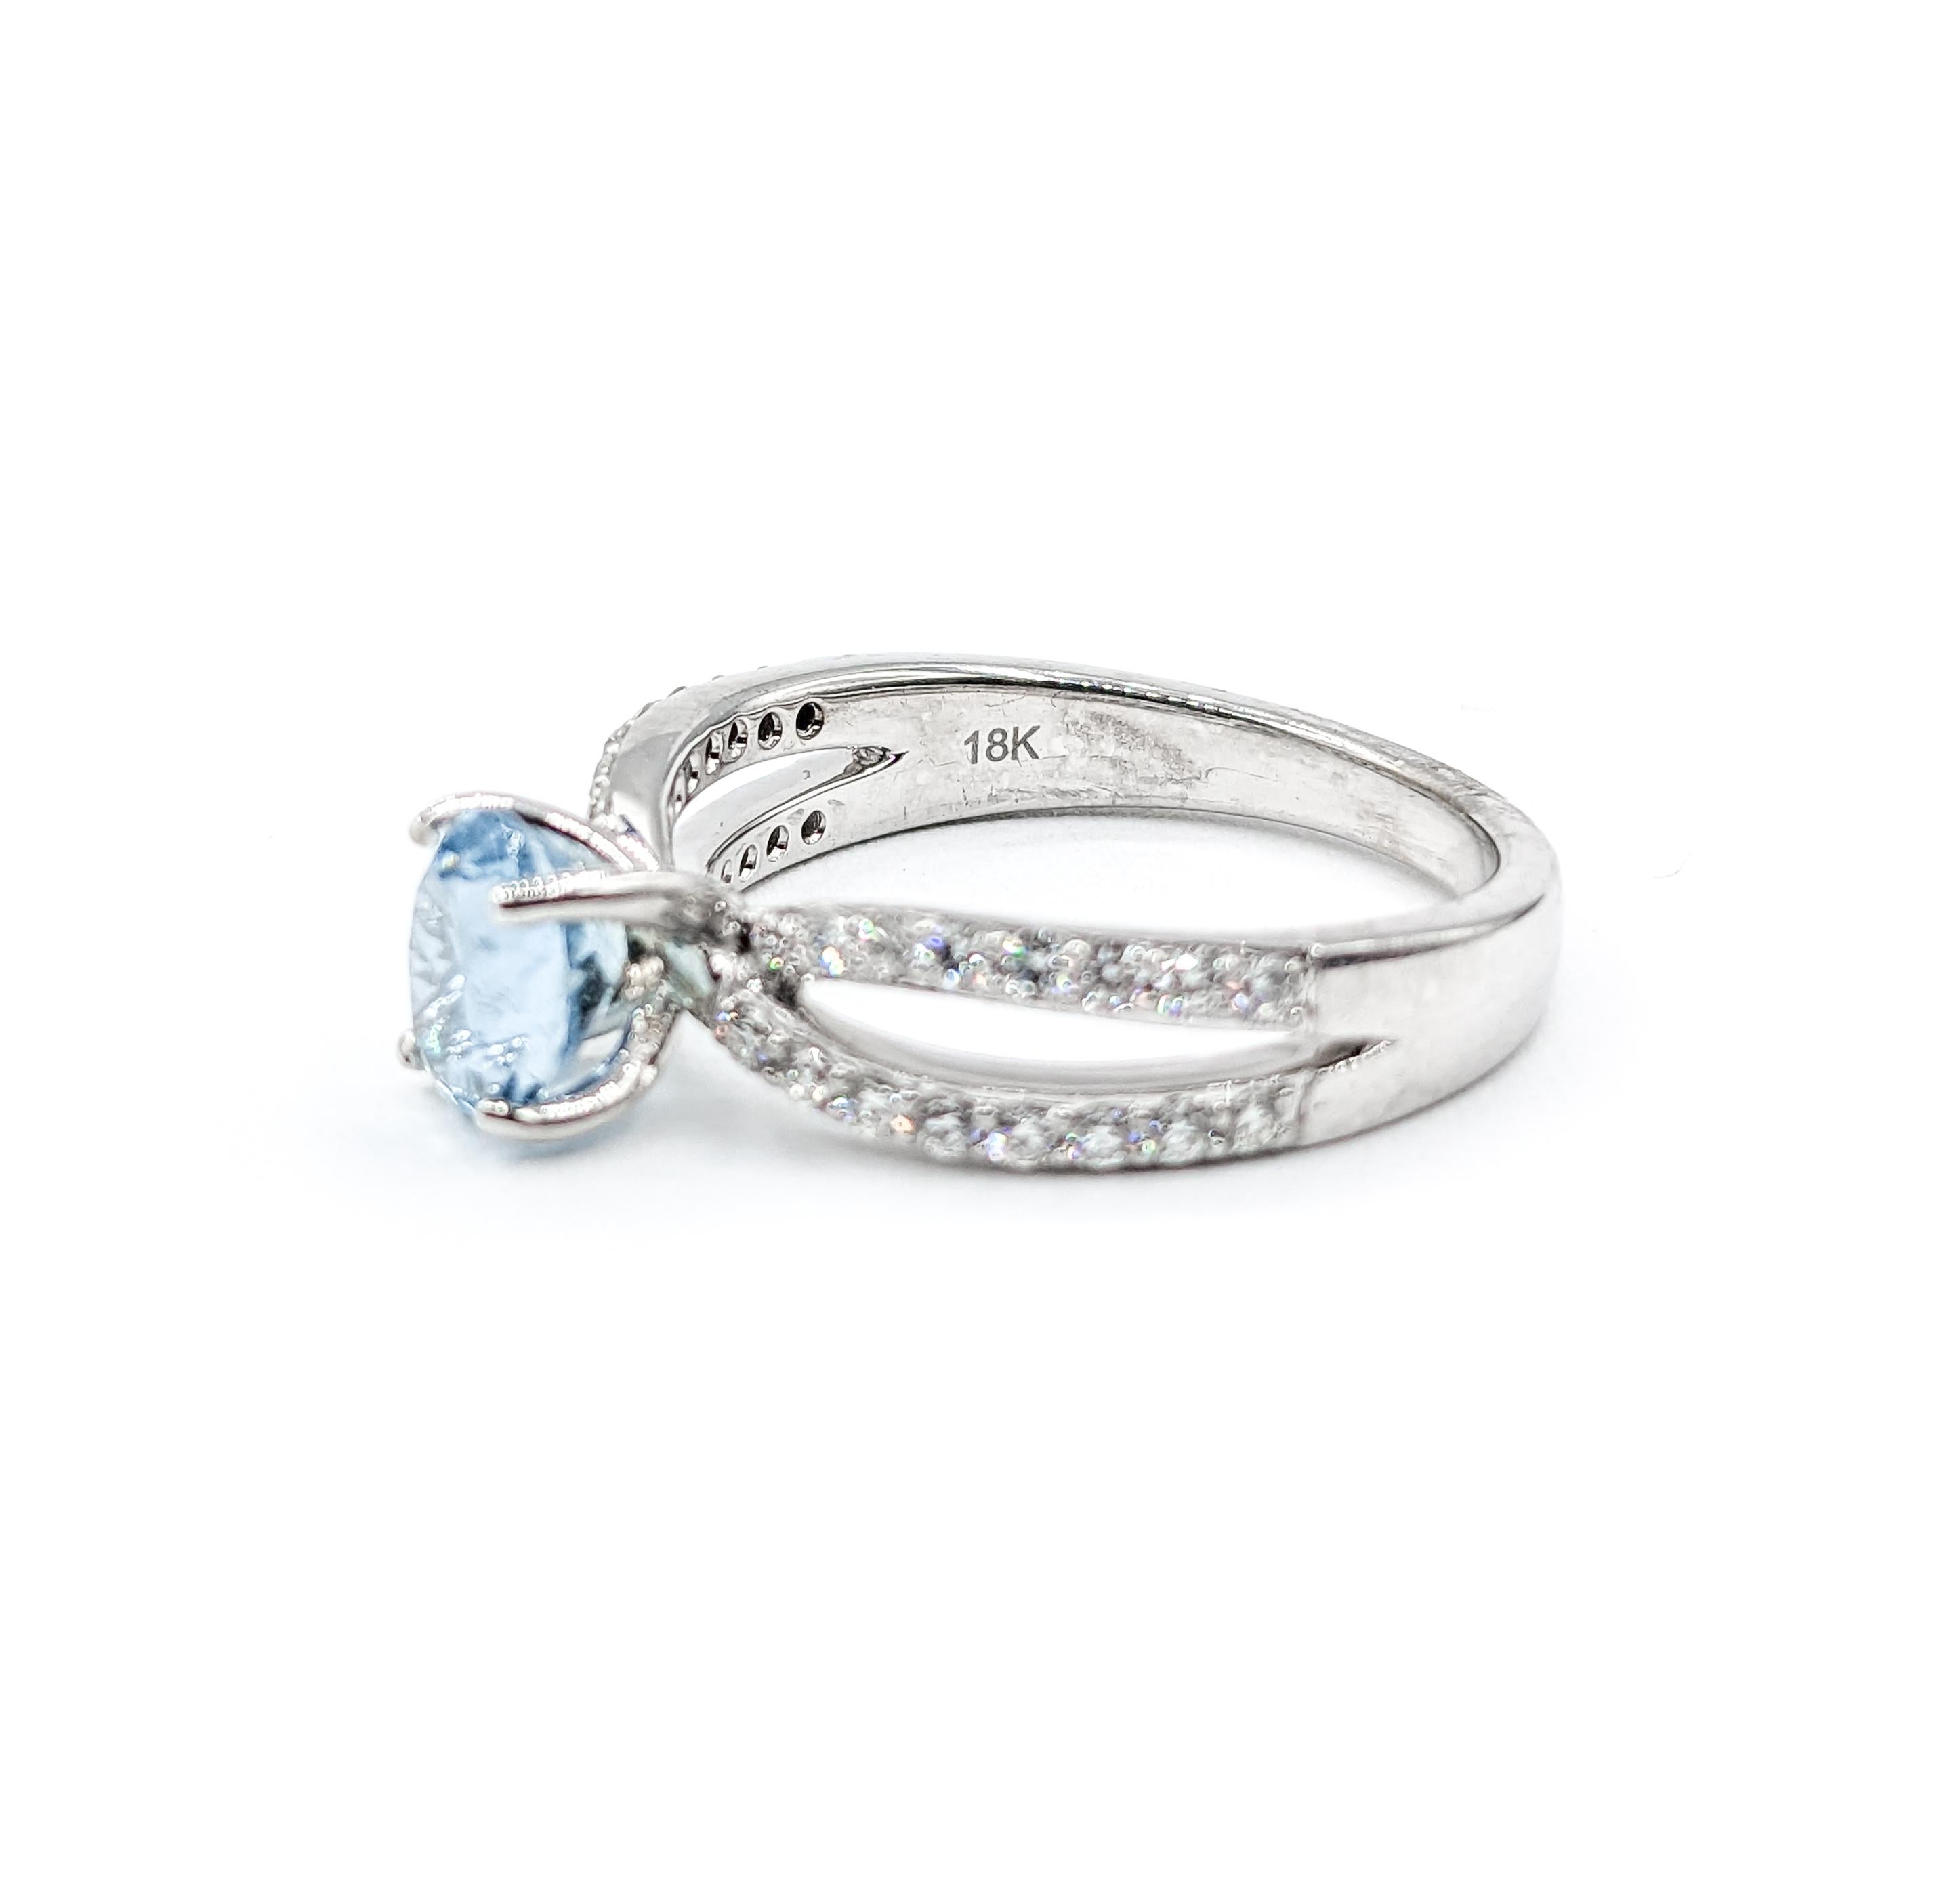 Aquamarine & Diamond Ring in 18k White Gold For Sale 2